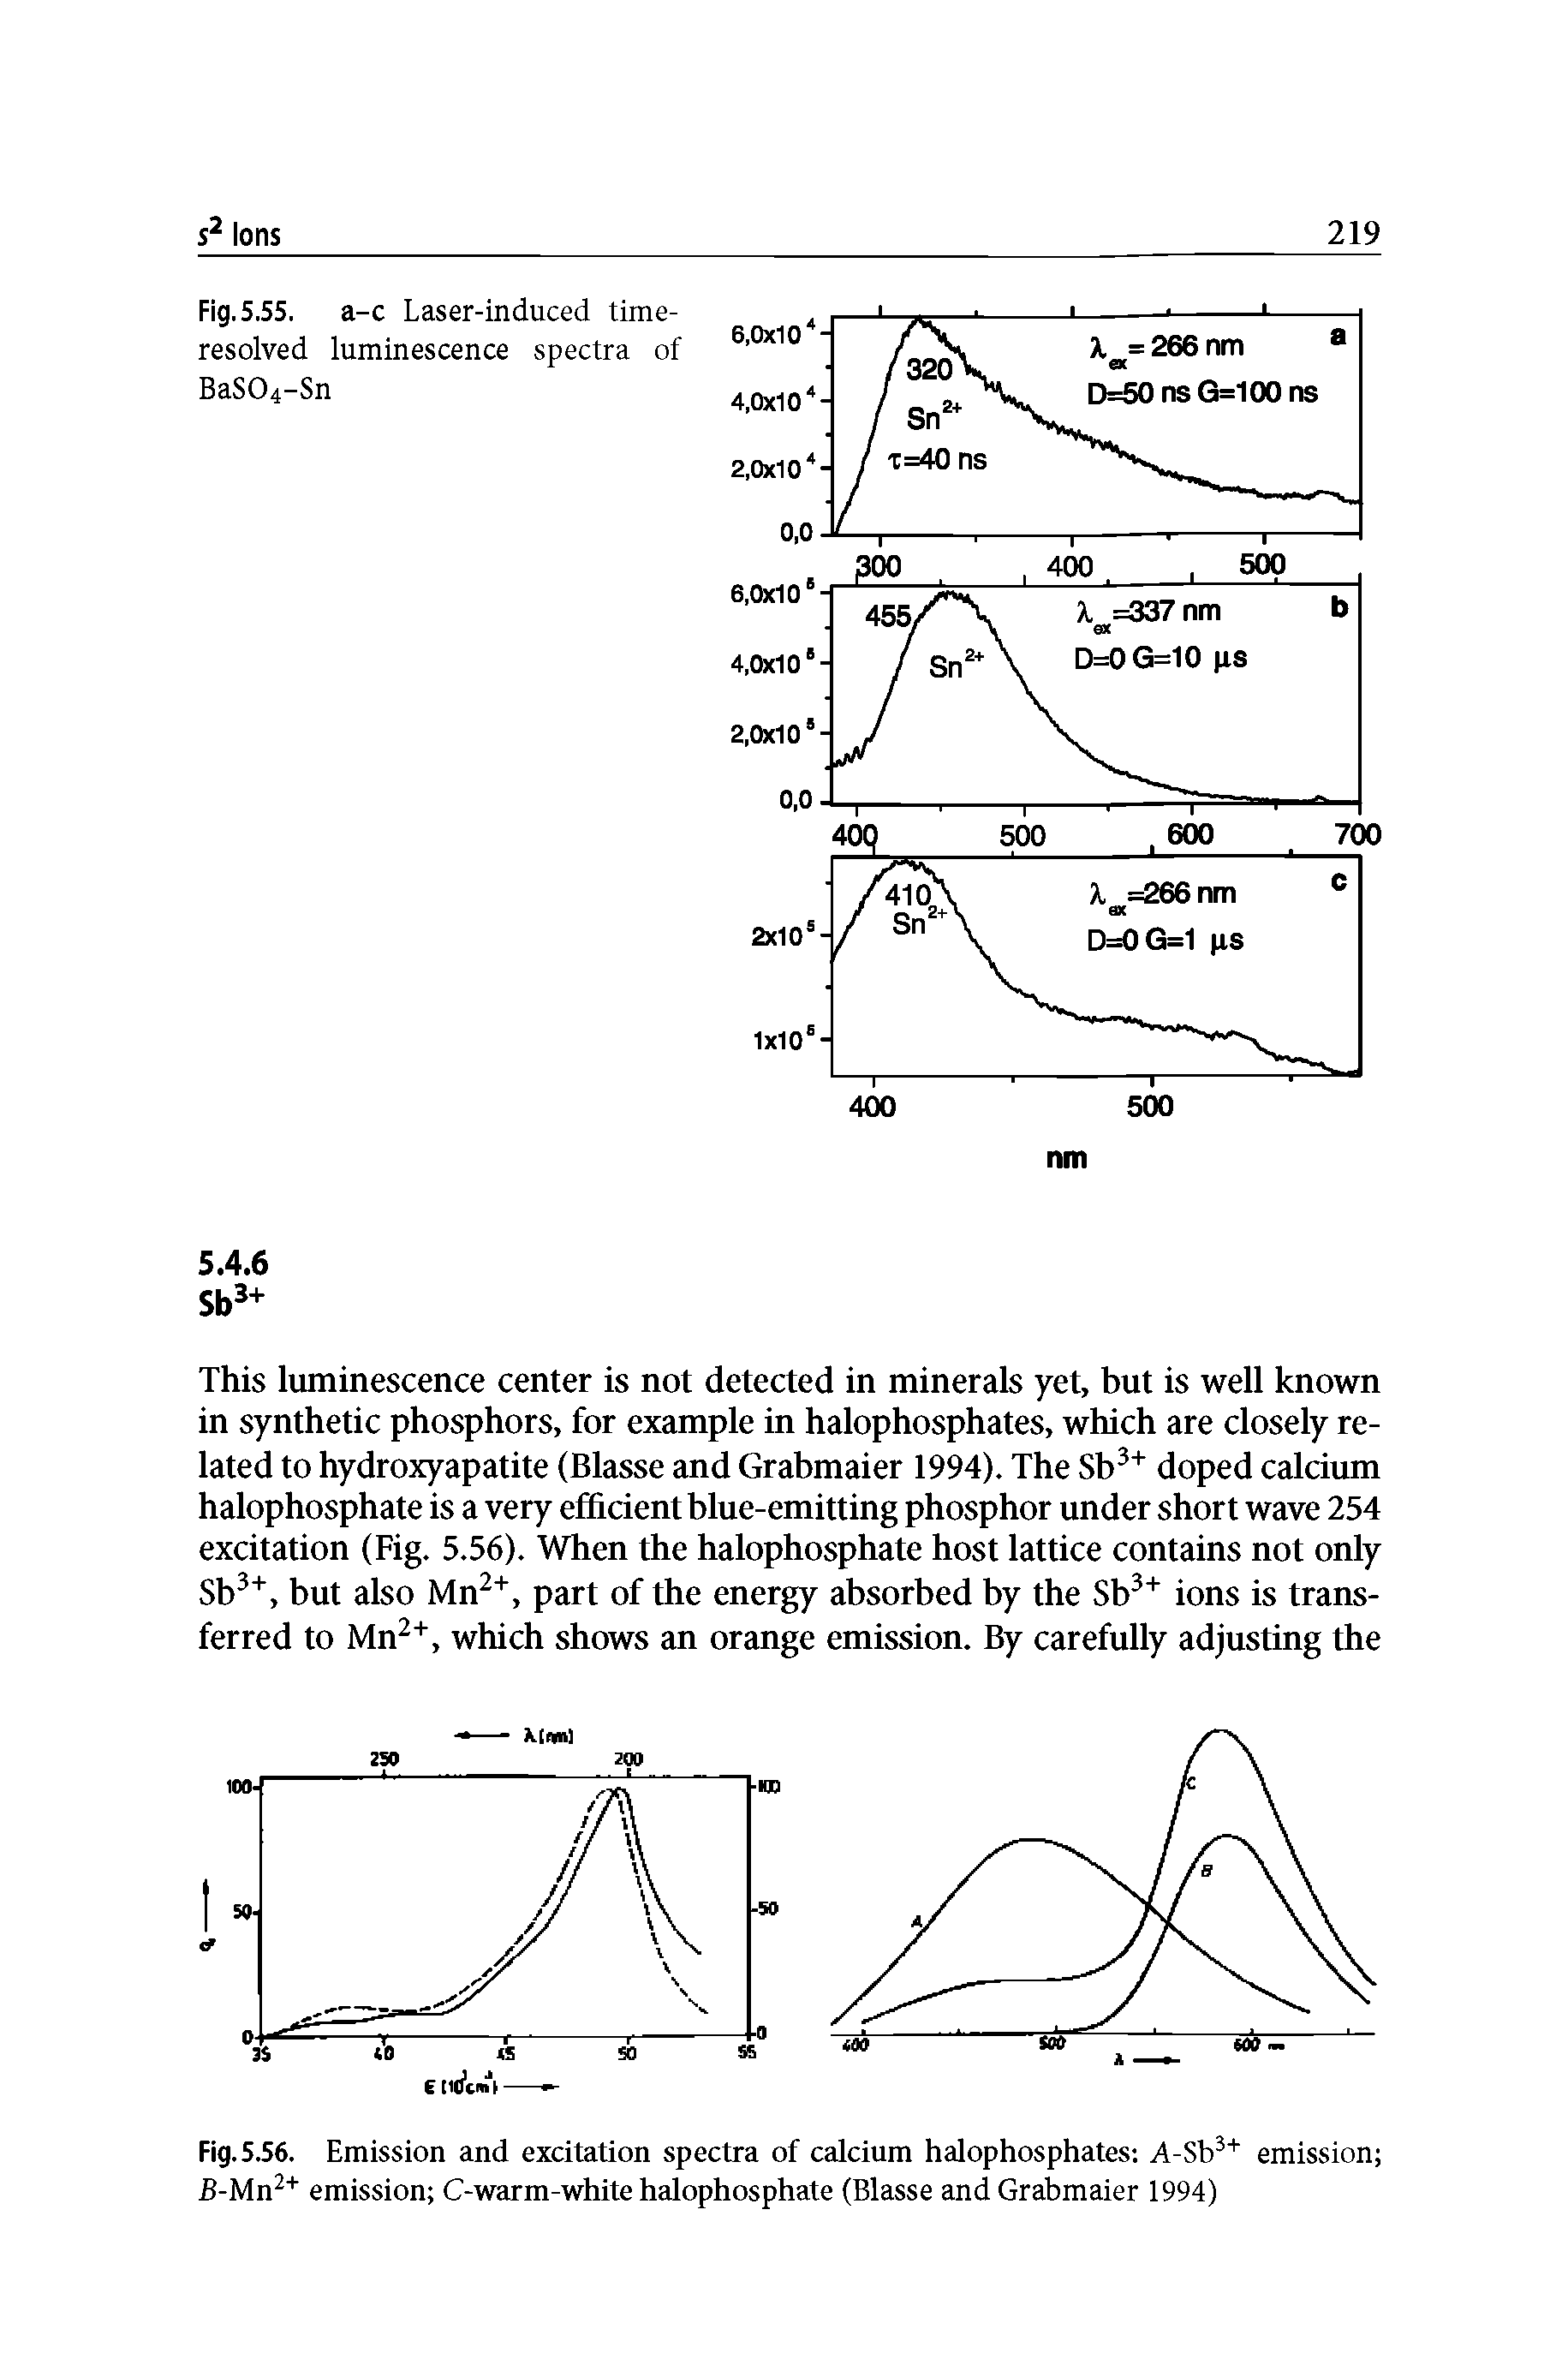 Fig. 5.56. Emission and excitation spectra of calcium halophosphates A-Sb emission B-Mn emission C-warm-white halophosphate (Blasse and Grabmaier 1994)...